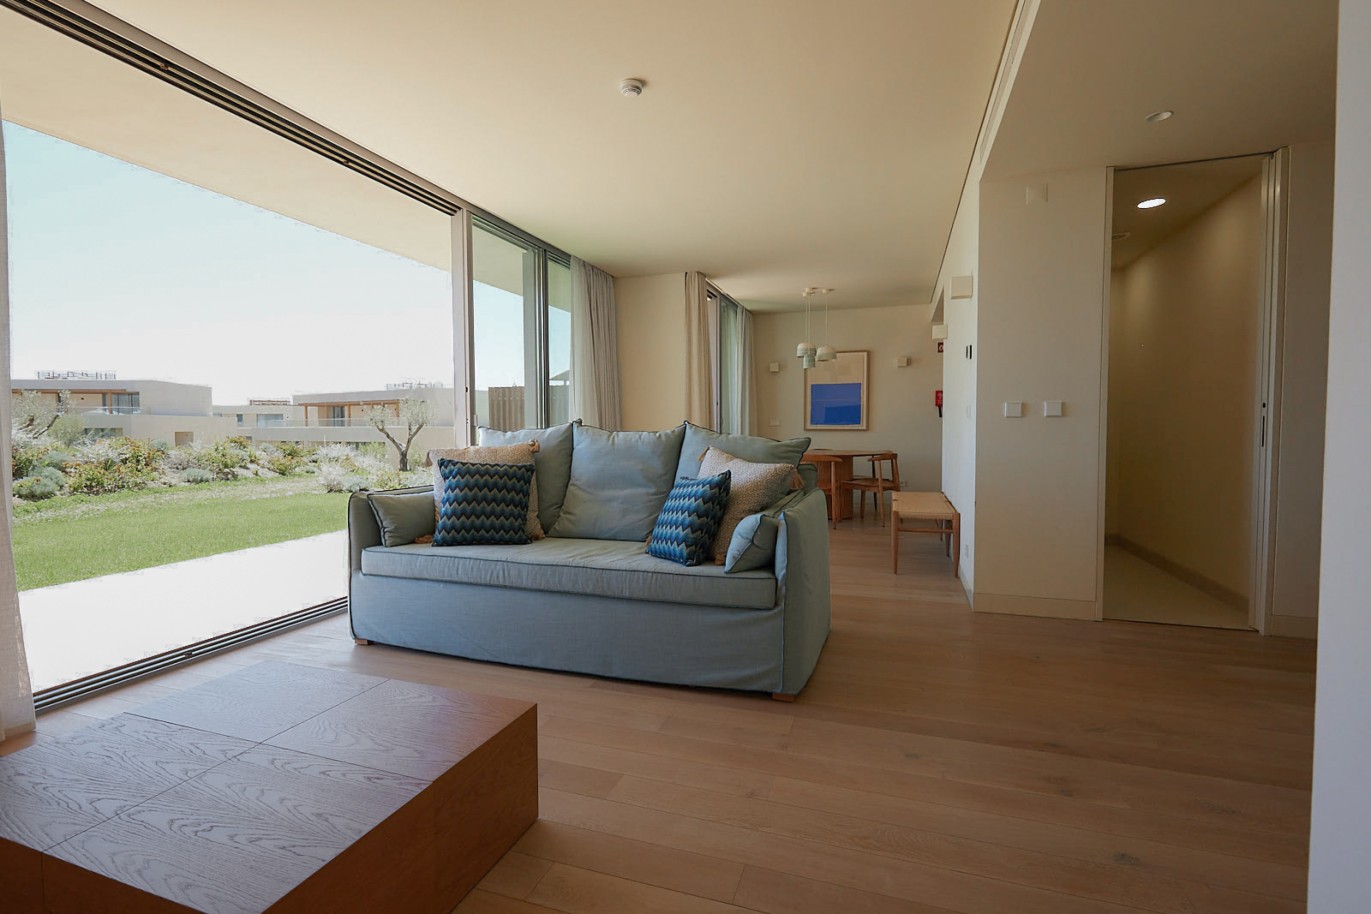 2 bedroom apartment in resort, for sale in Porches, Algarve_229072